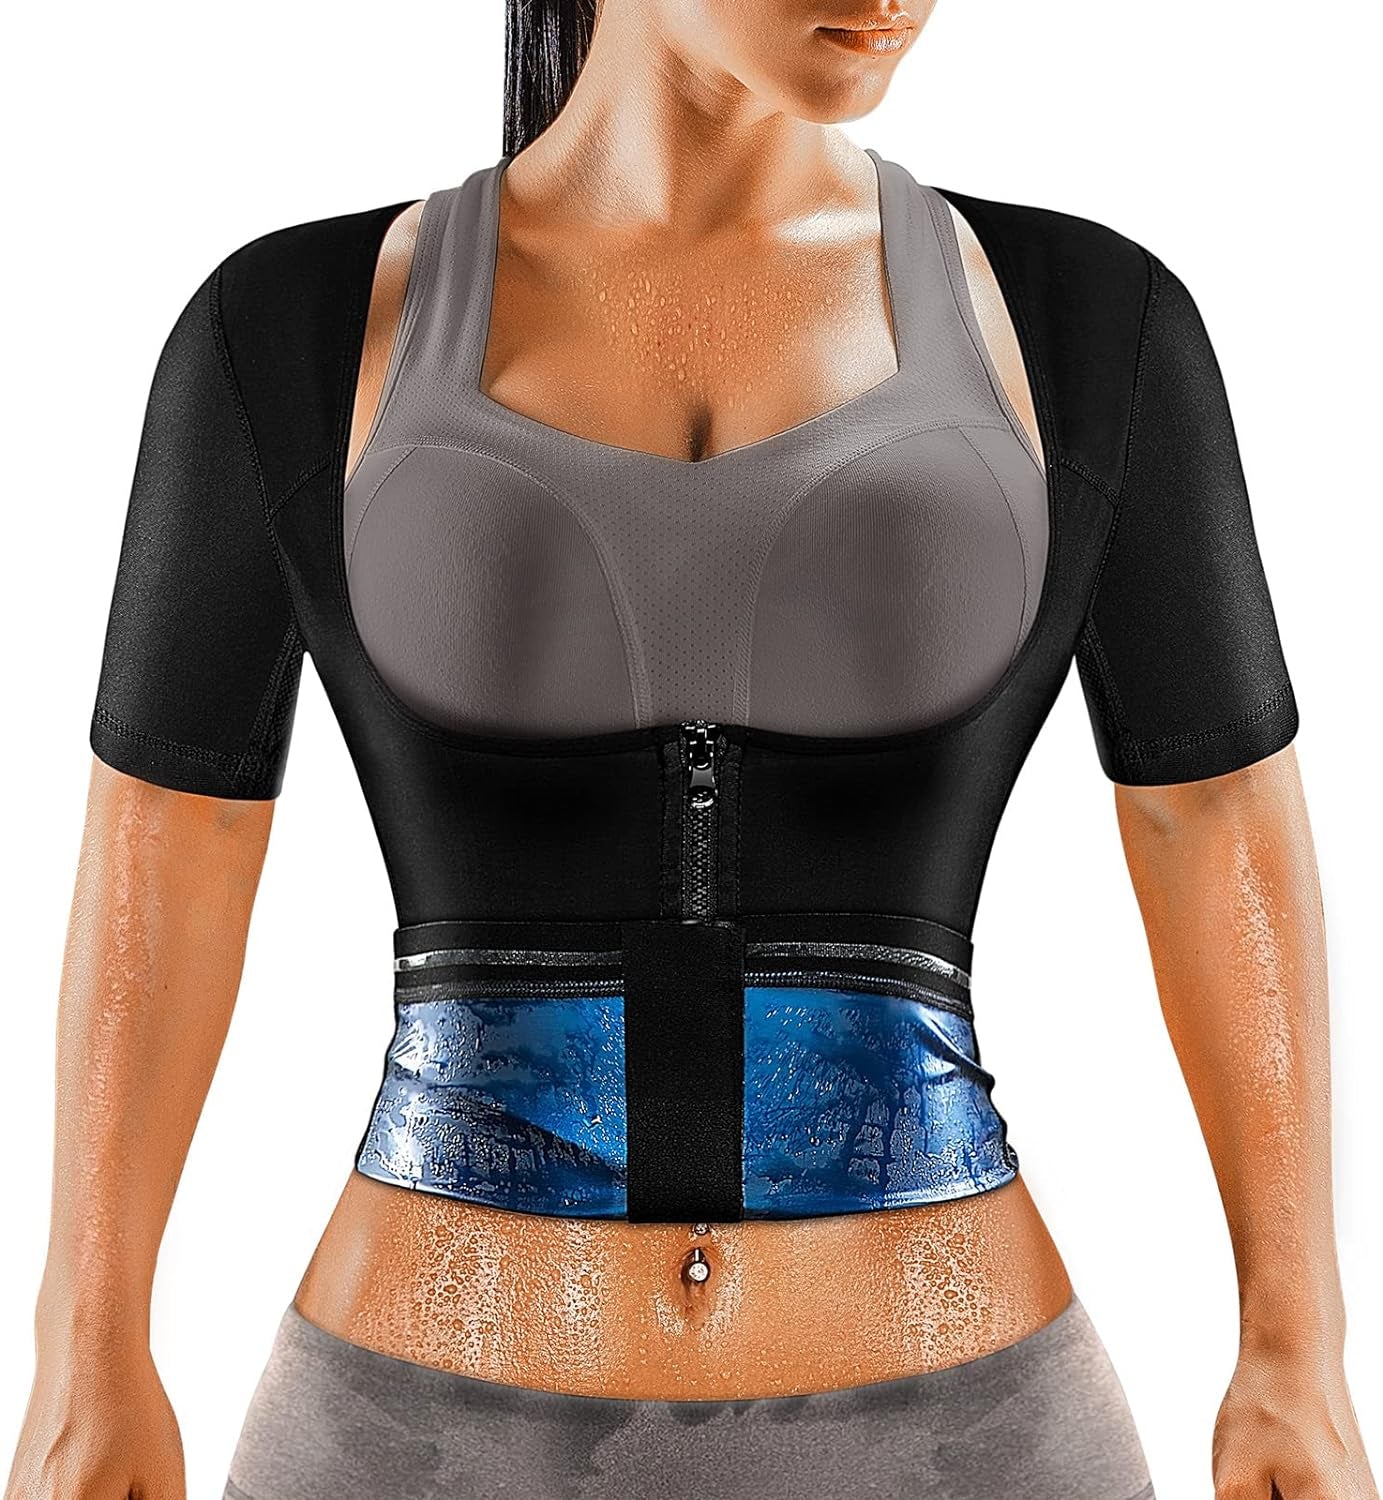 Sauna Sweat Suit Weight Loss Shapewear Top Waist Trainer Workout